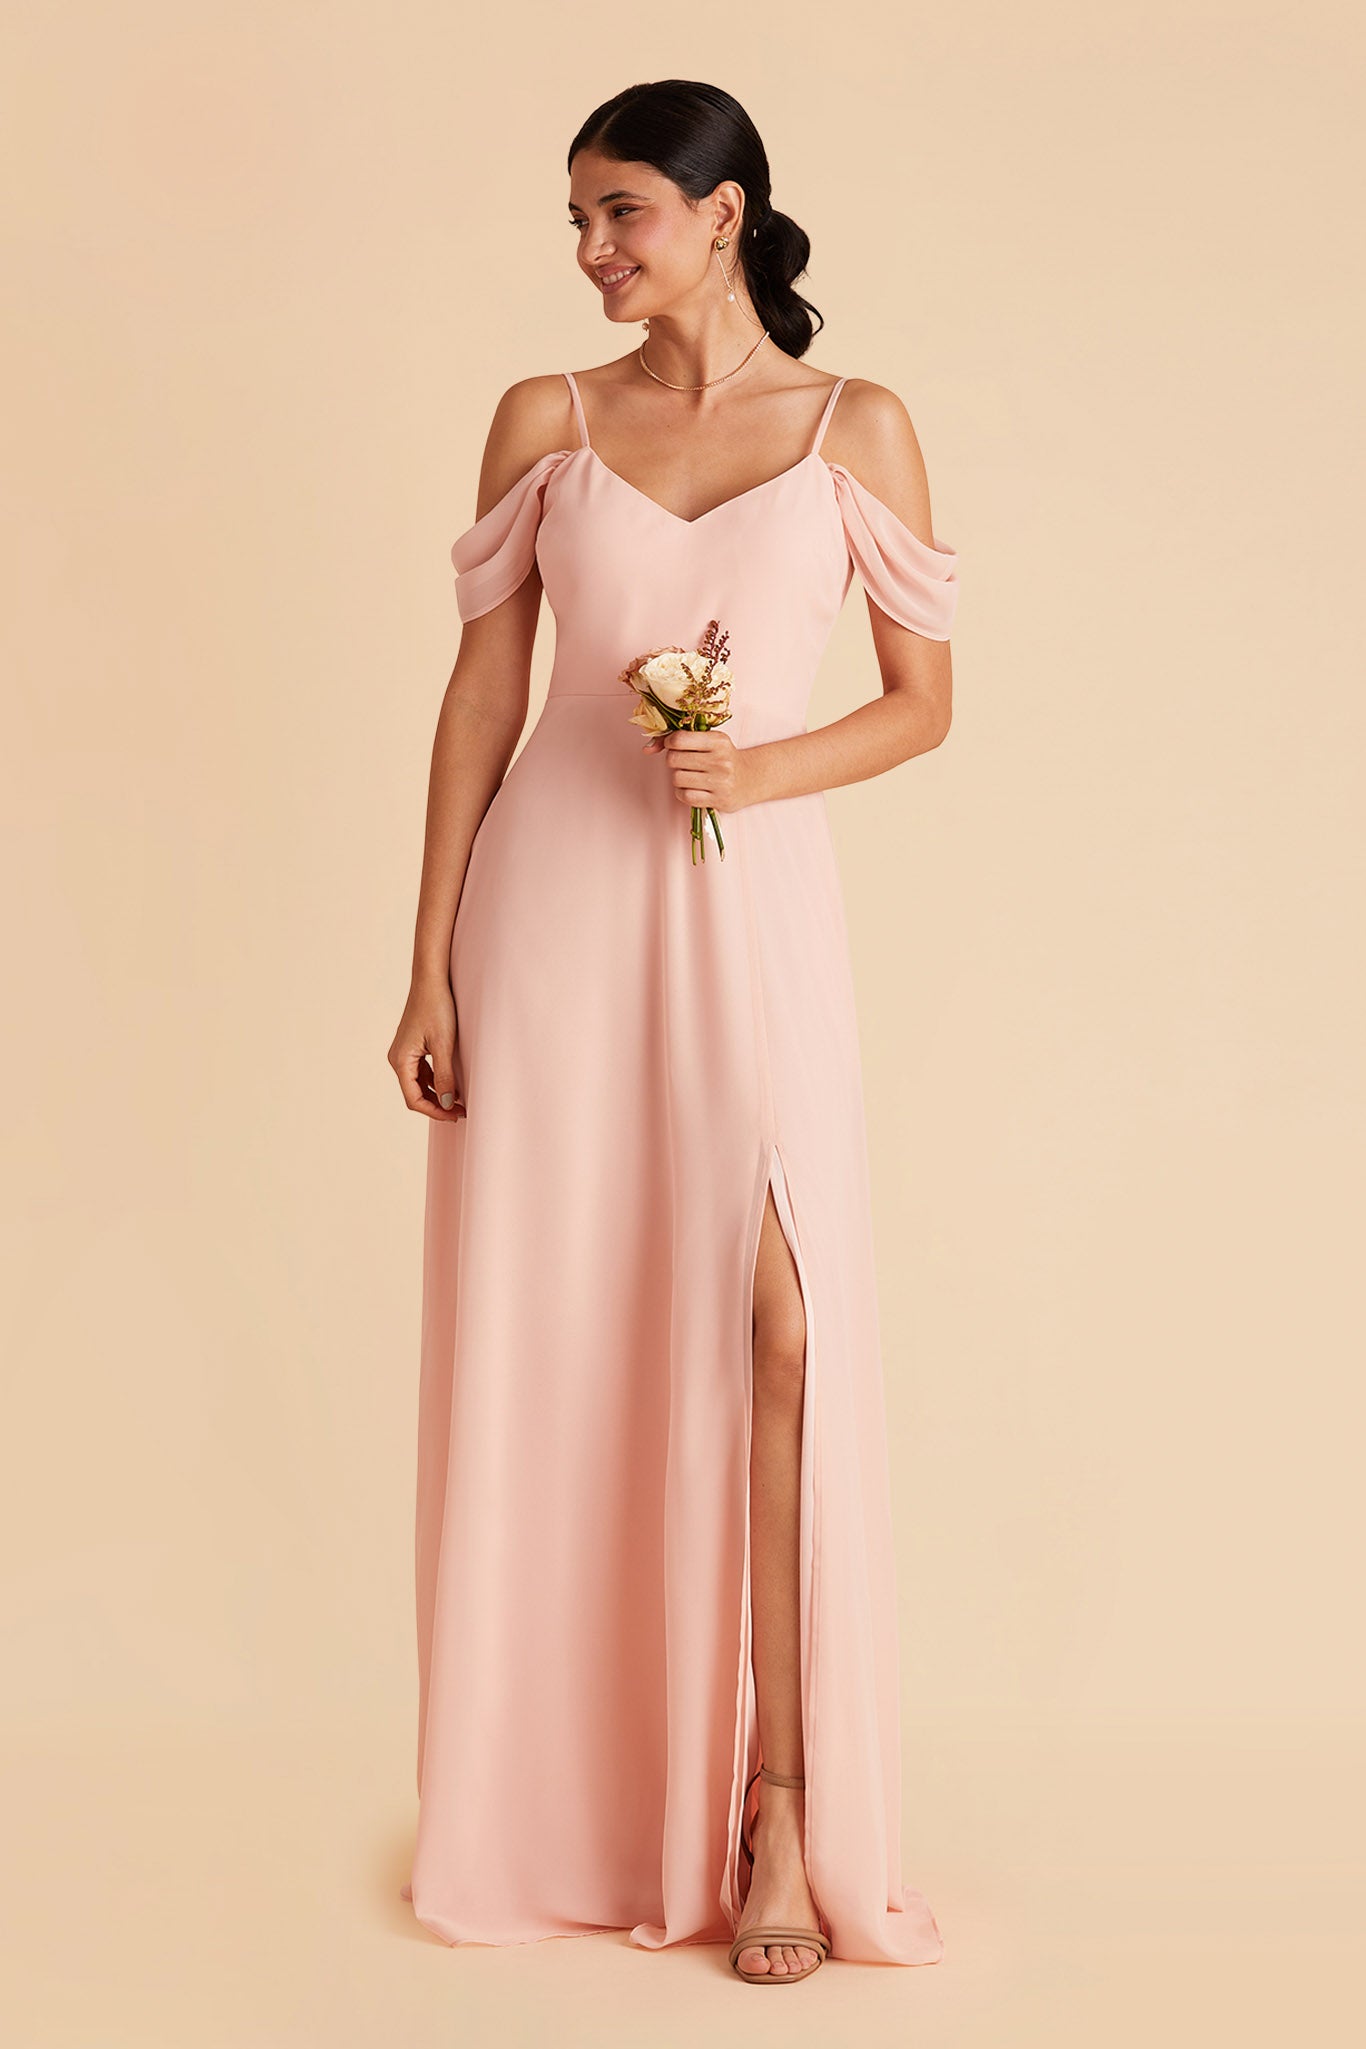 Blush Pink Infinity Dress,bridesmaid Dress for Wedding,convertible